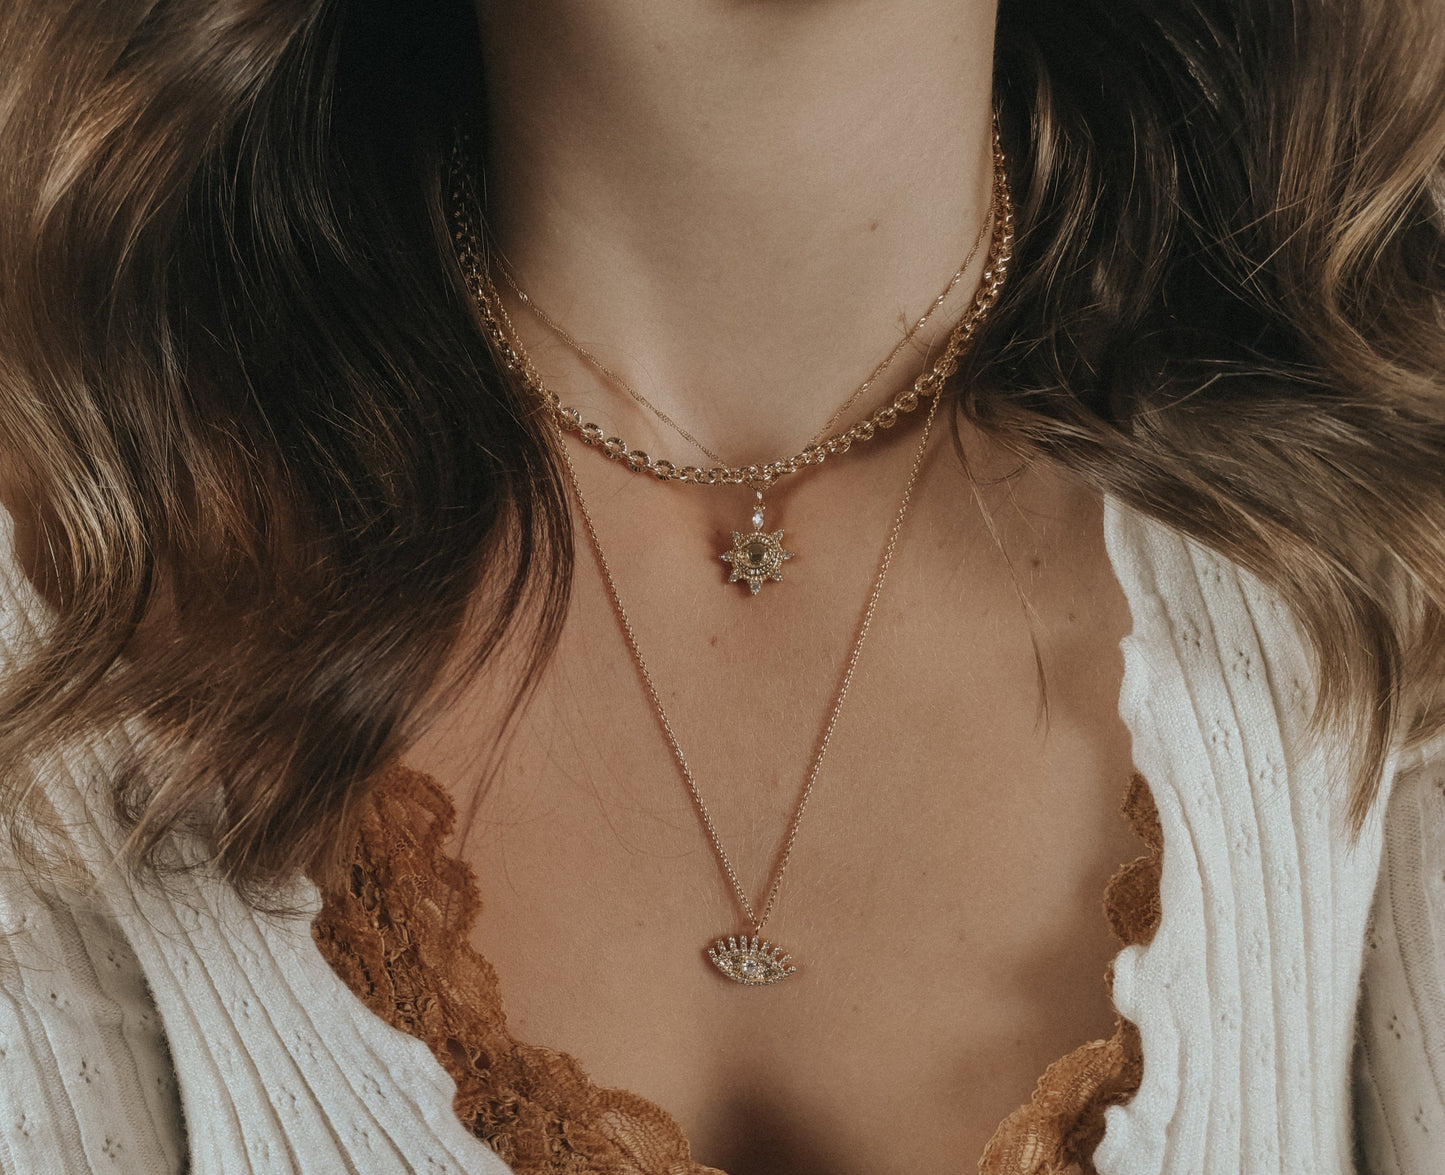 “Indie” necklace